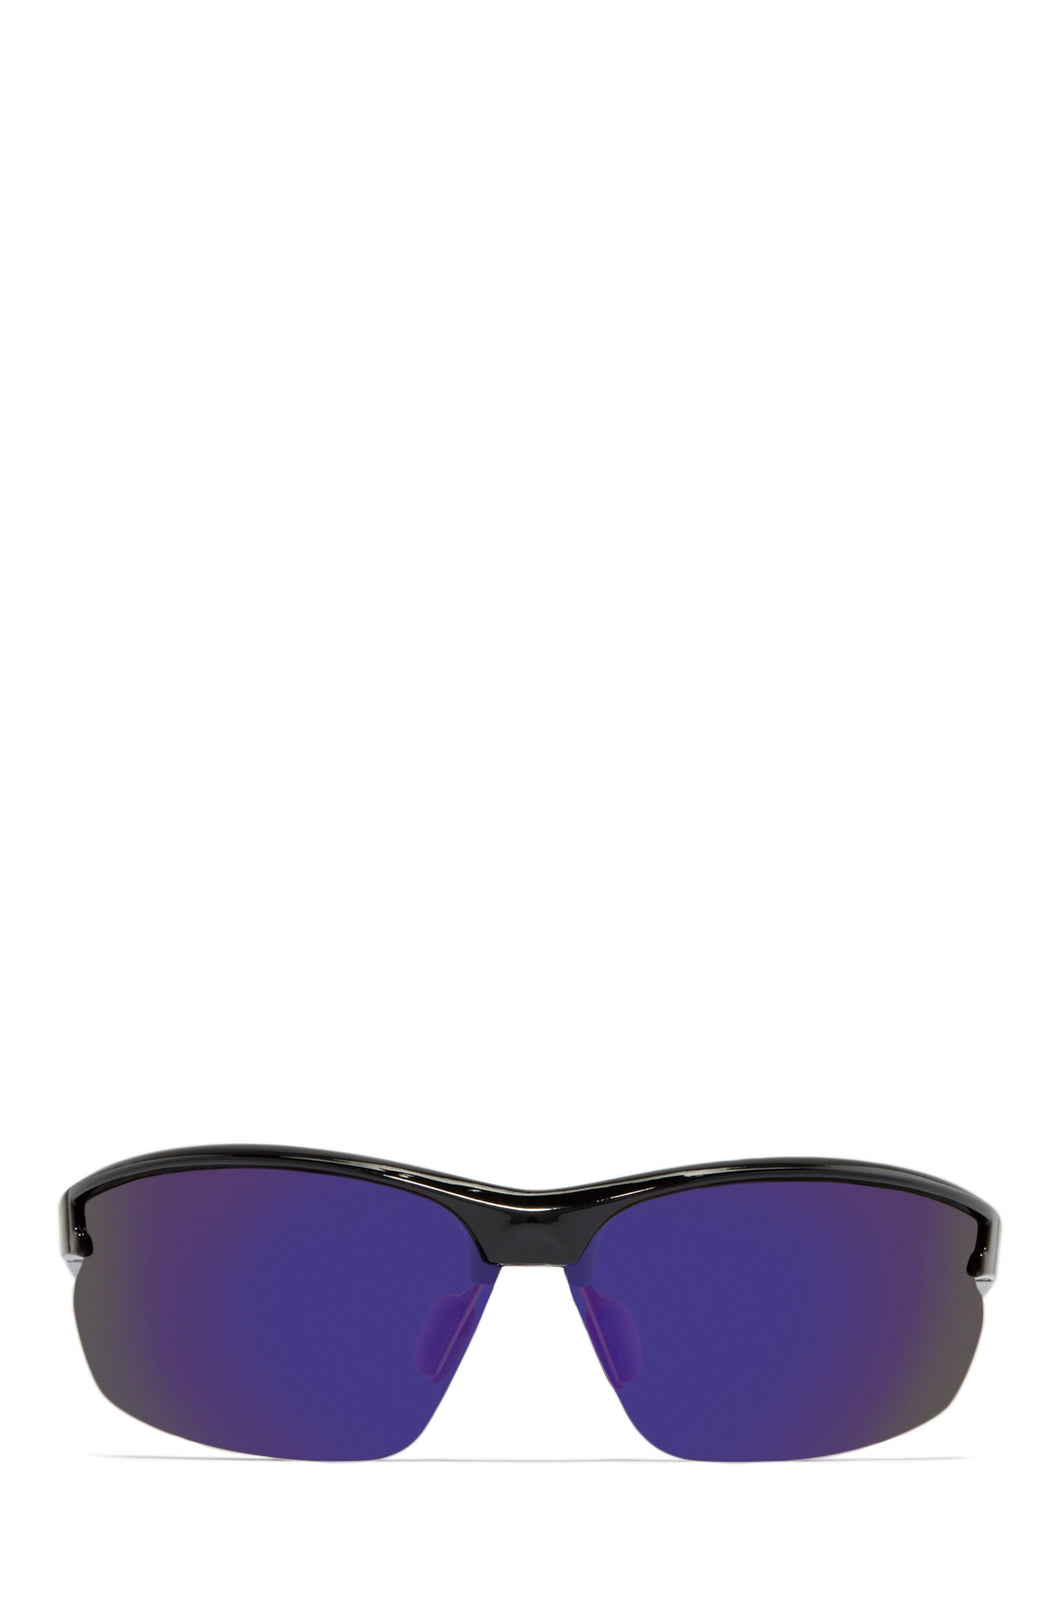 Blue Sunglasses